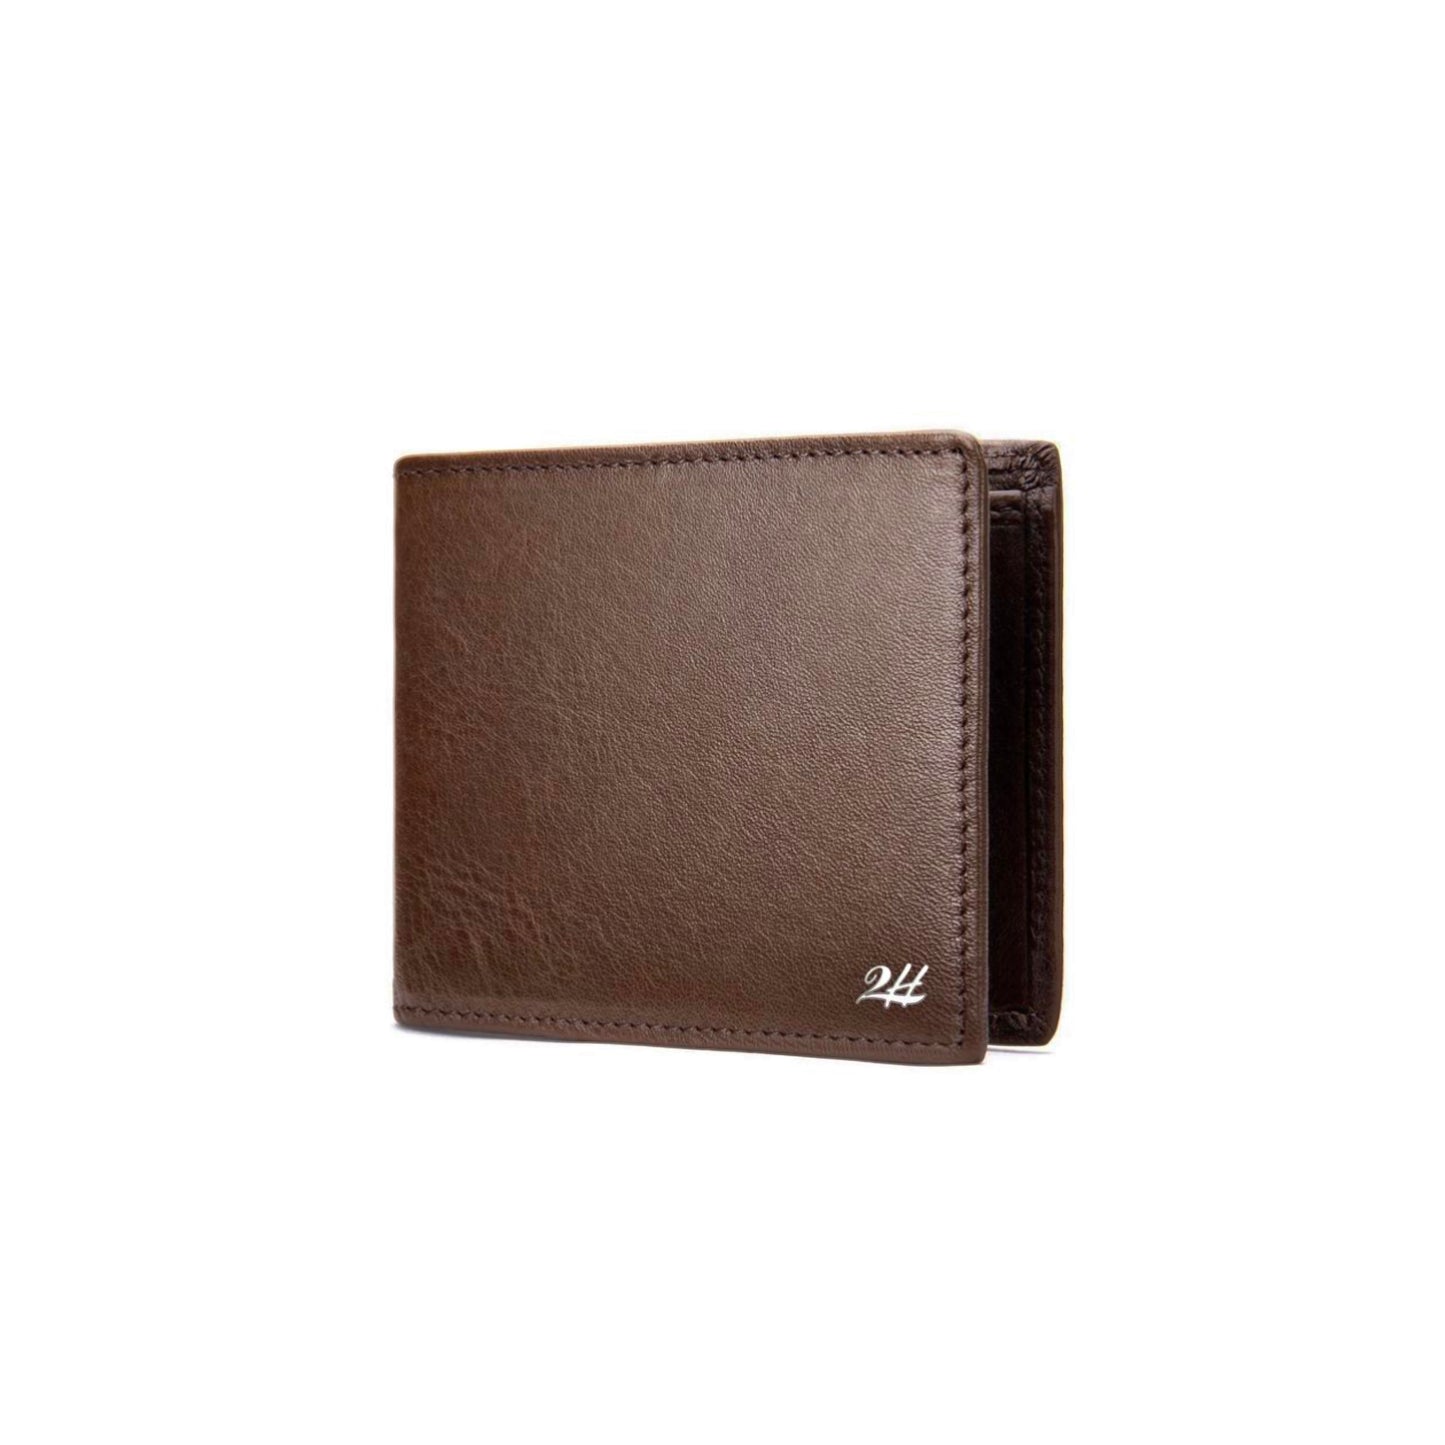 2H Brown Genuine Leather wallet